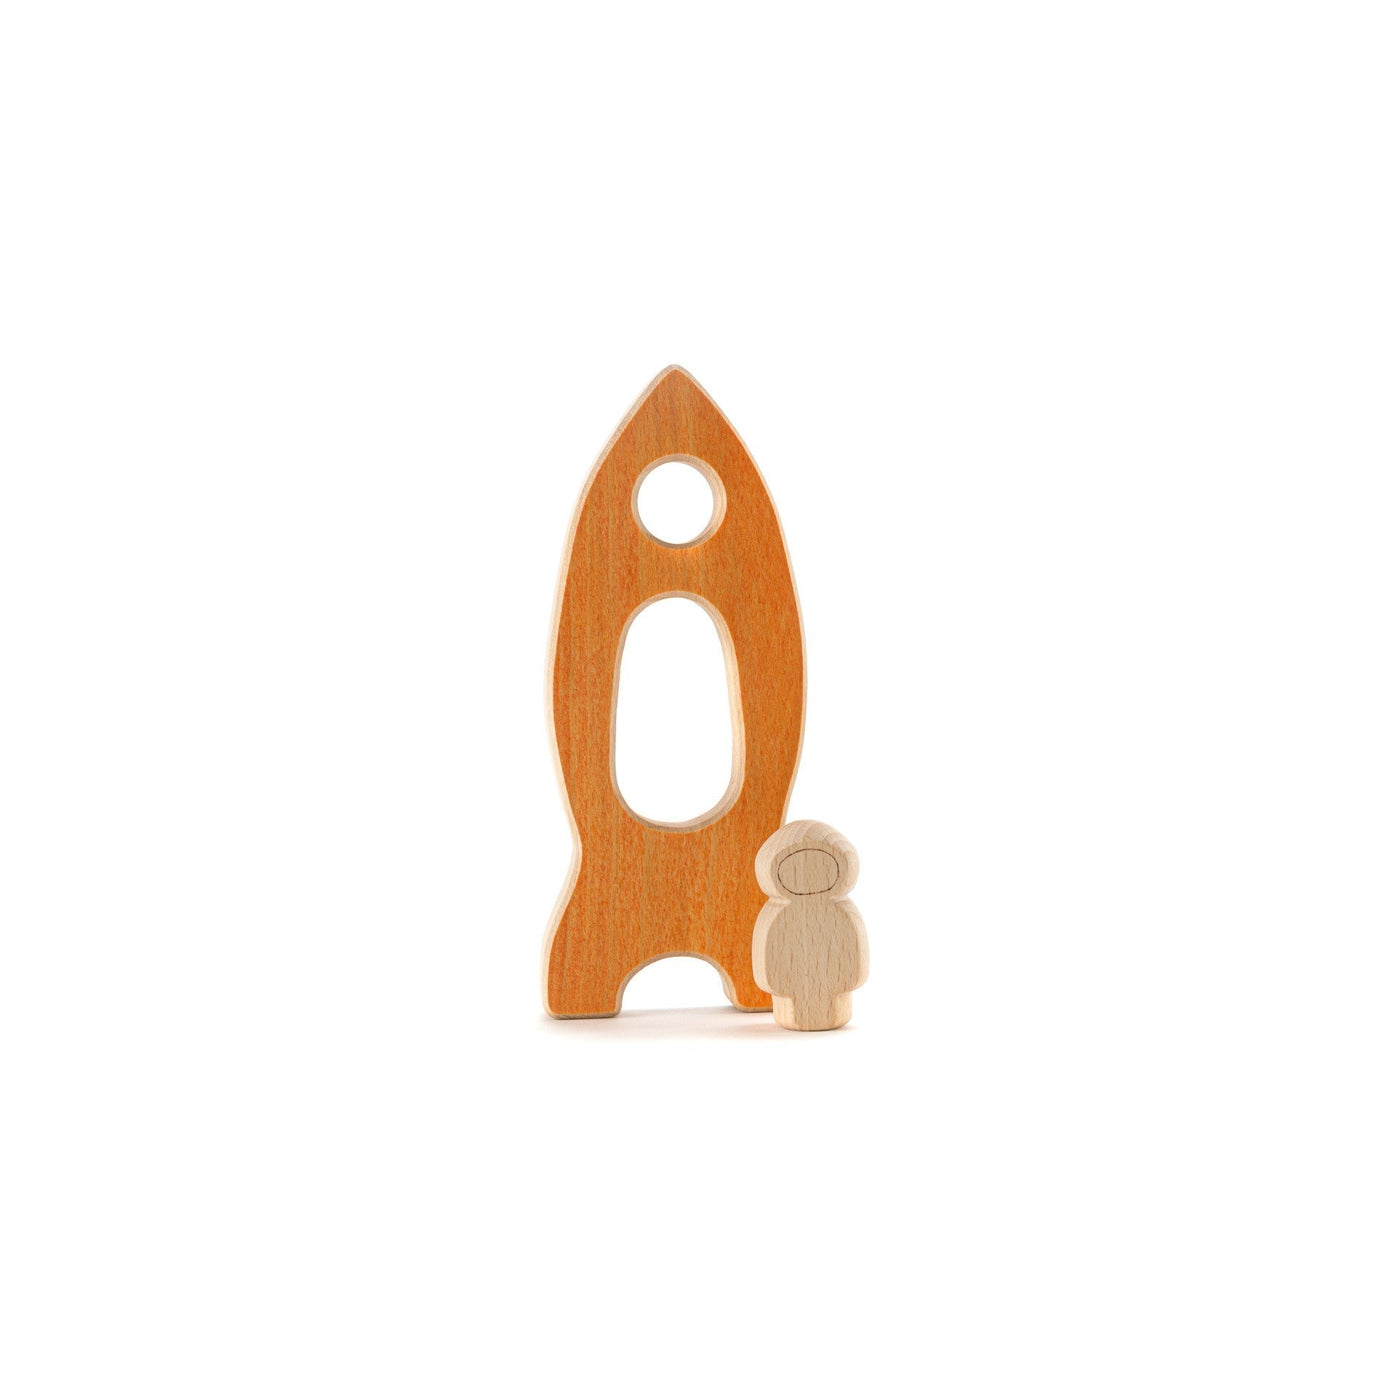 Rocket and Astronaut Wooden Figure